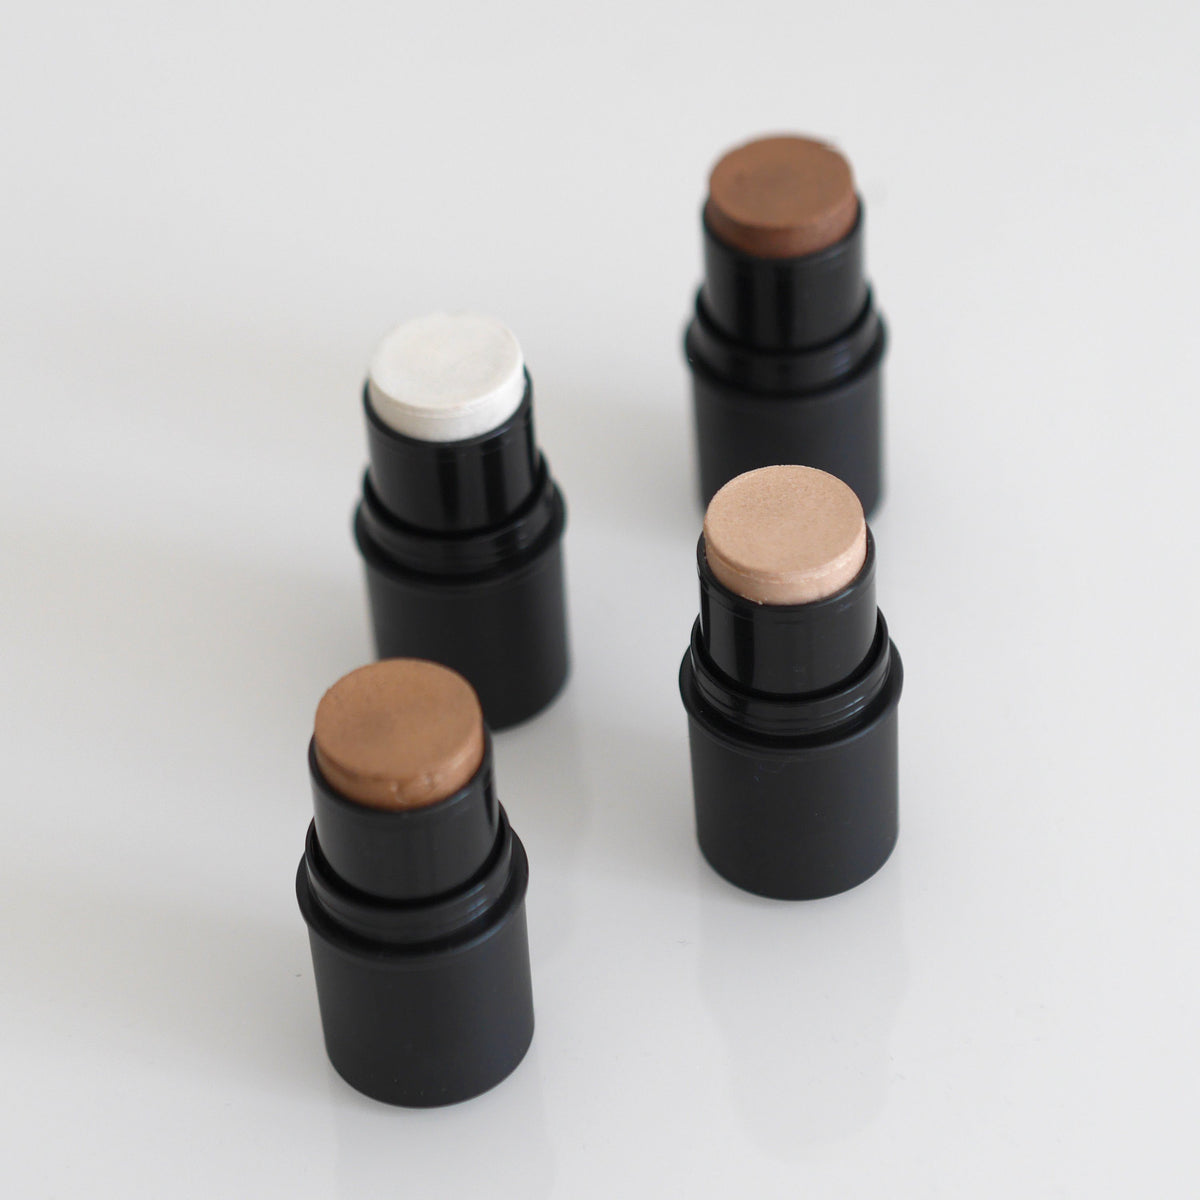 Multistick - Cream to Powder (neue Farben) Rouge HIRO Cosmetics - Genuine Selection